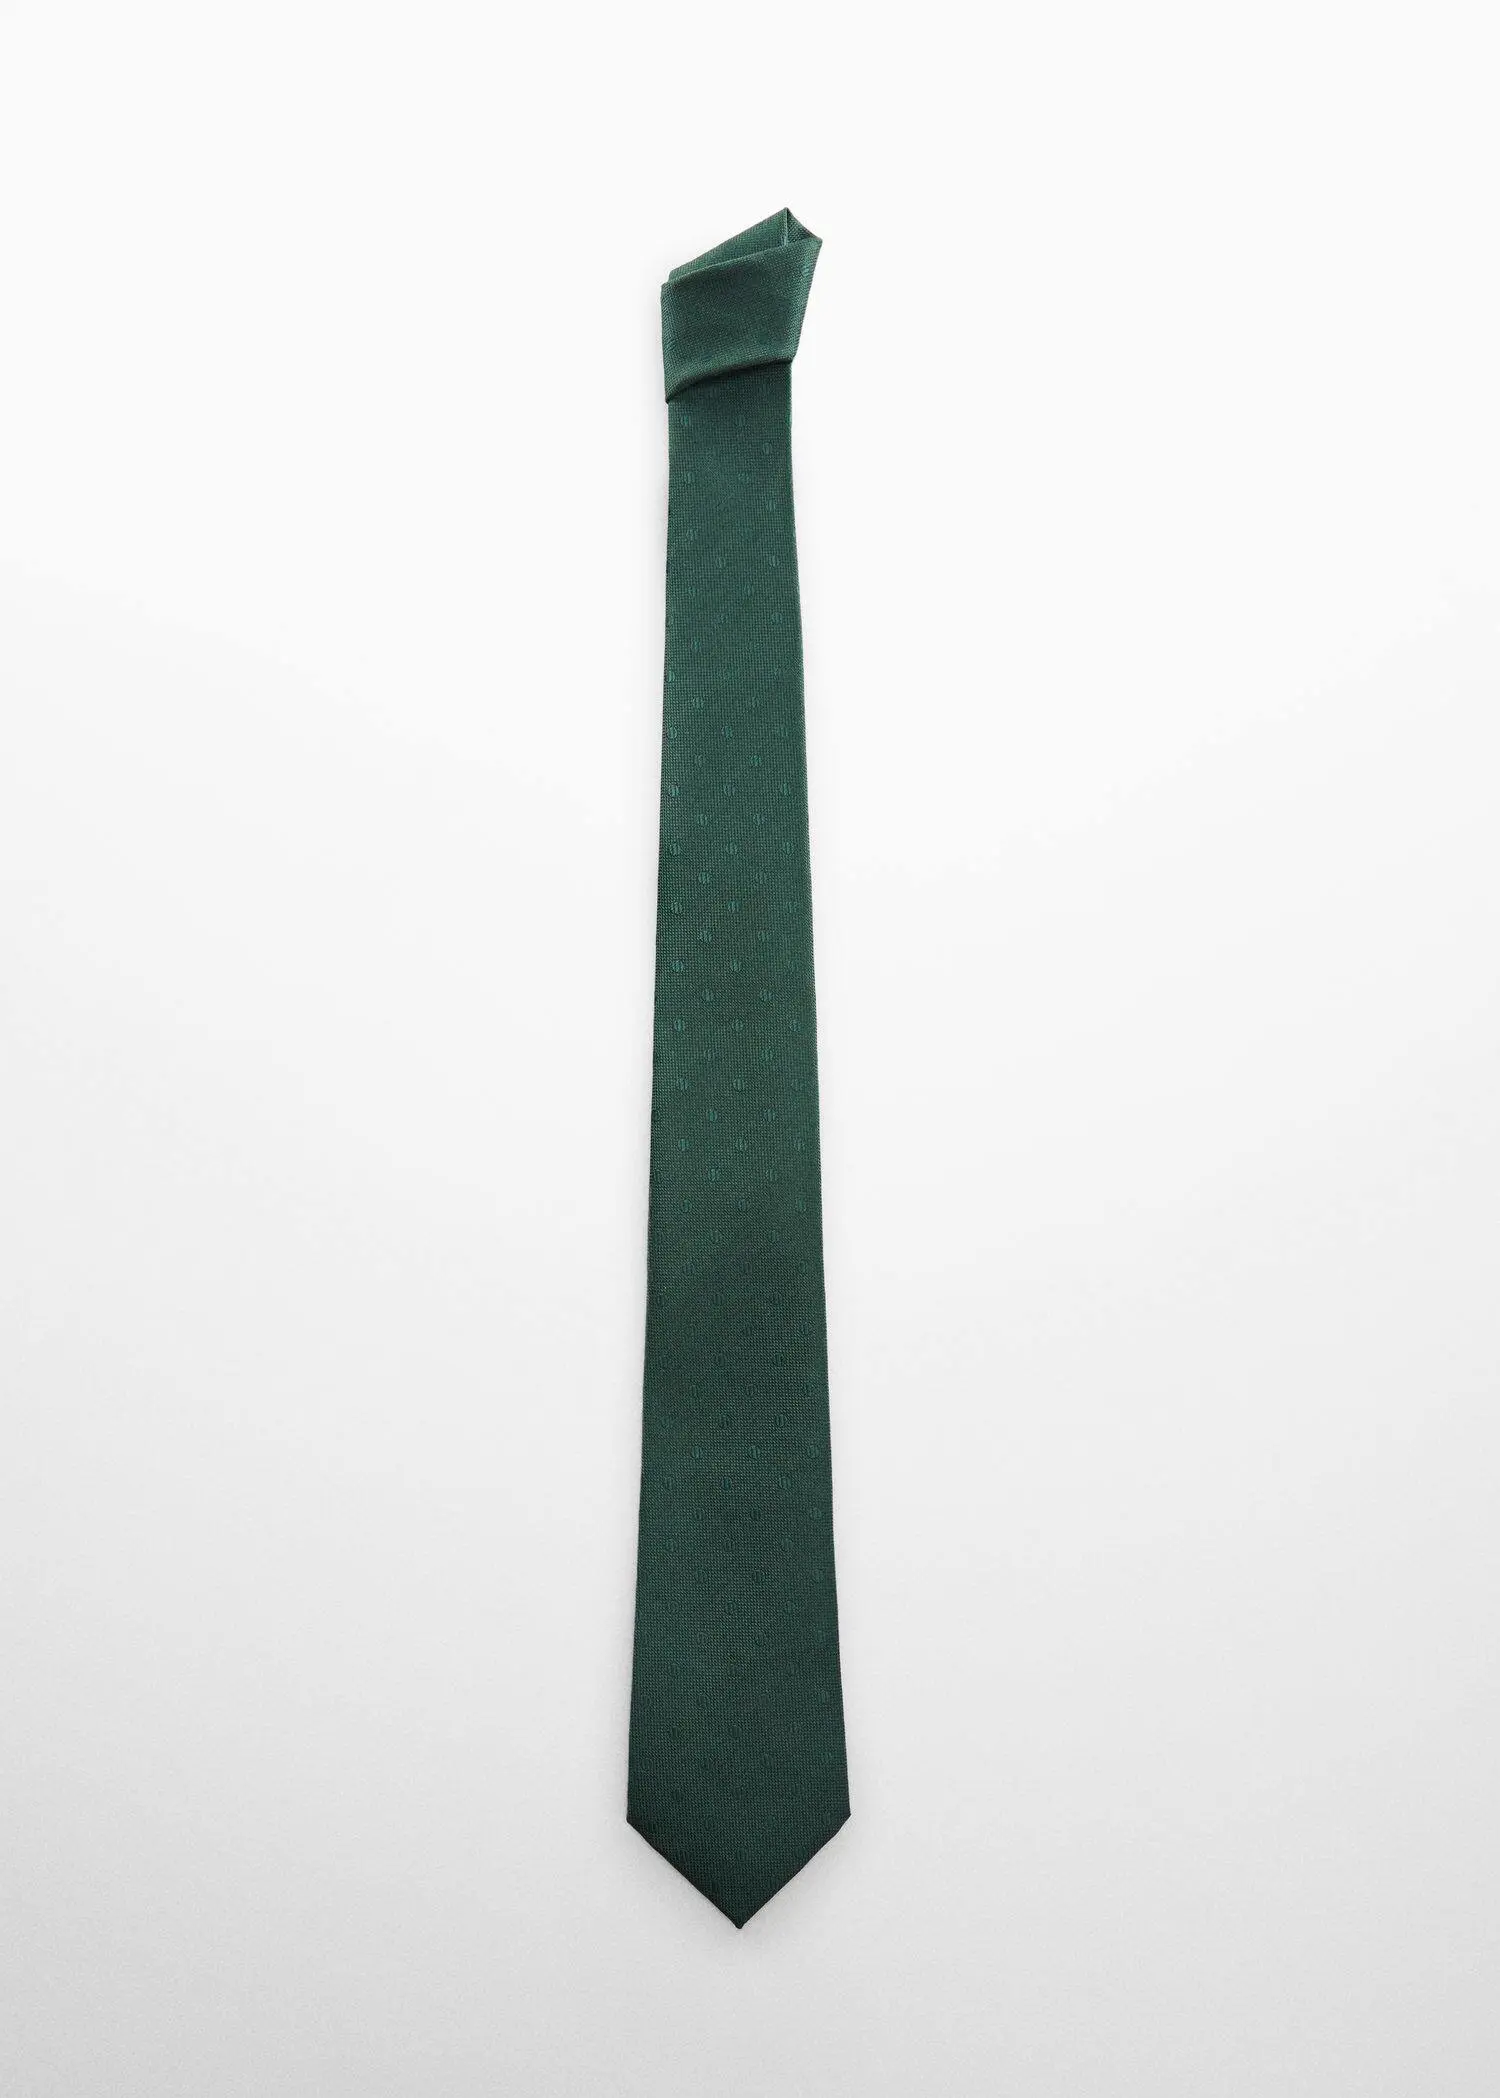 Mango Micro-print tie. a dark green neck tie on a white background. 